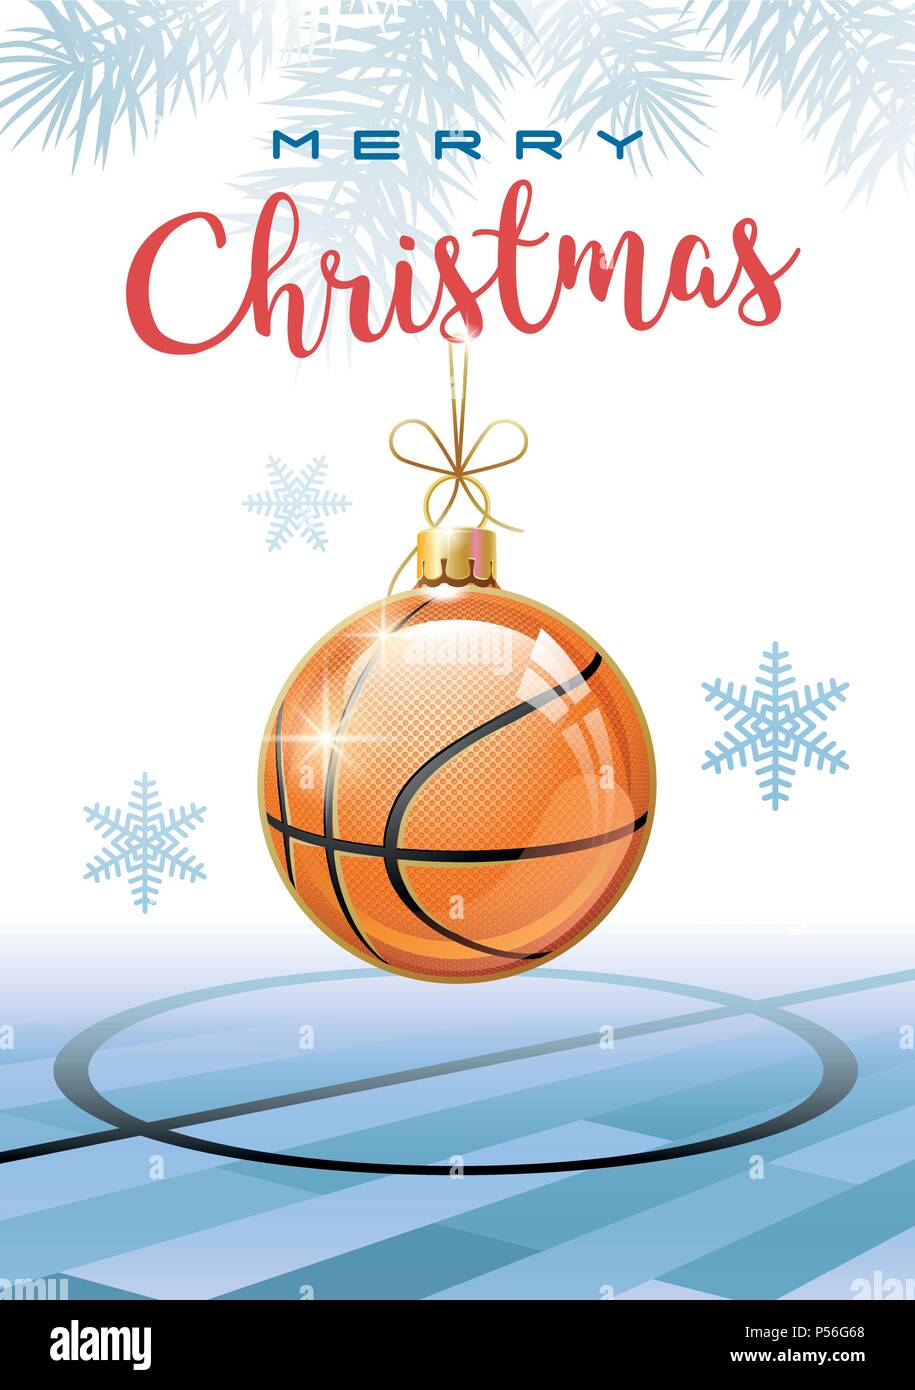 Joyeux Noel Sports Carte De Vœux Ballon De Basket Ball Realiste En Forme De Boule De Noel Vector Illustration Image Vectorielle Stock Alamy